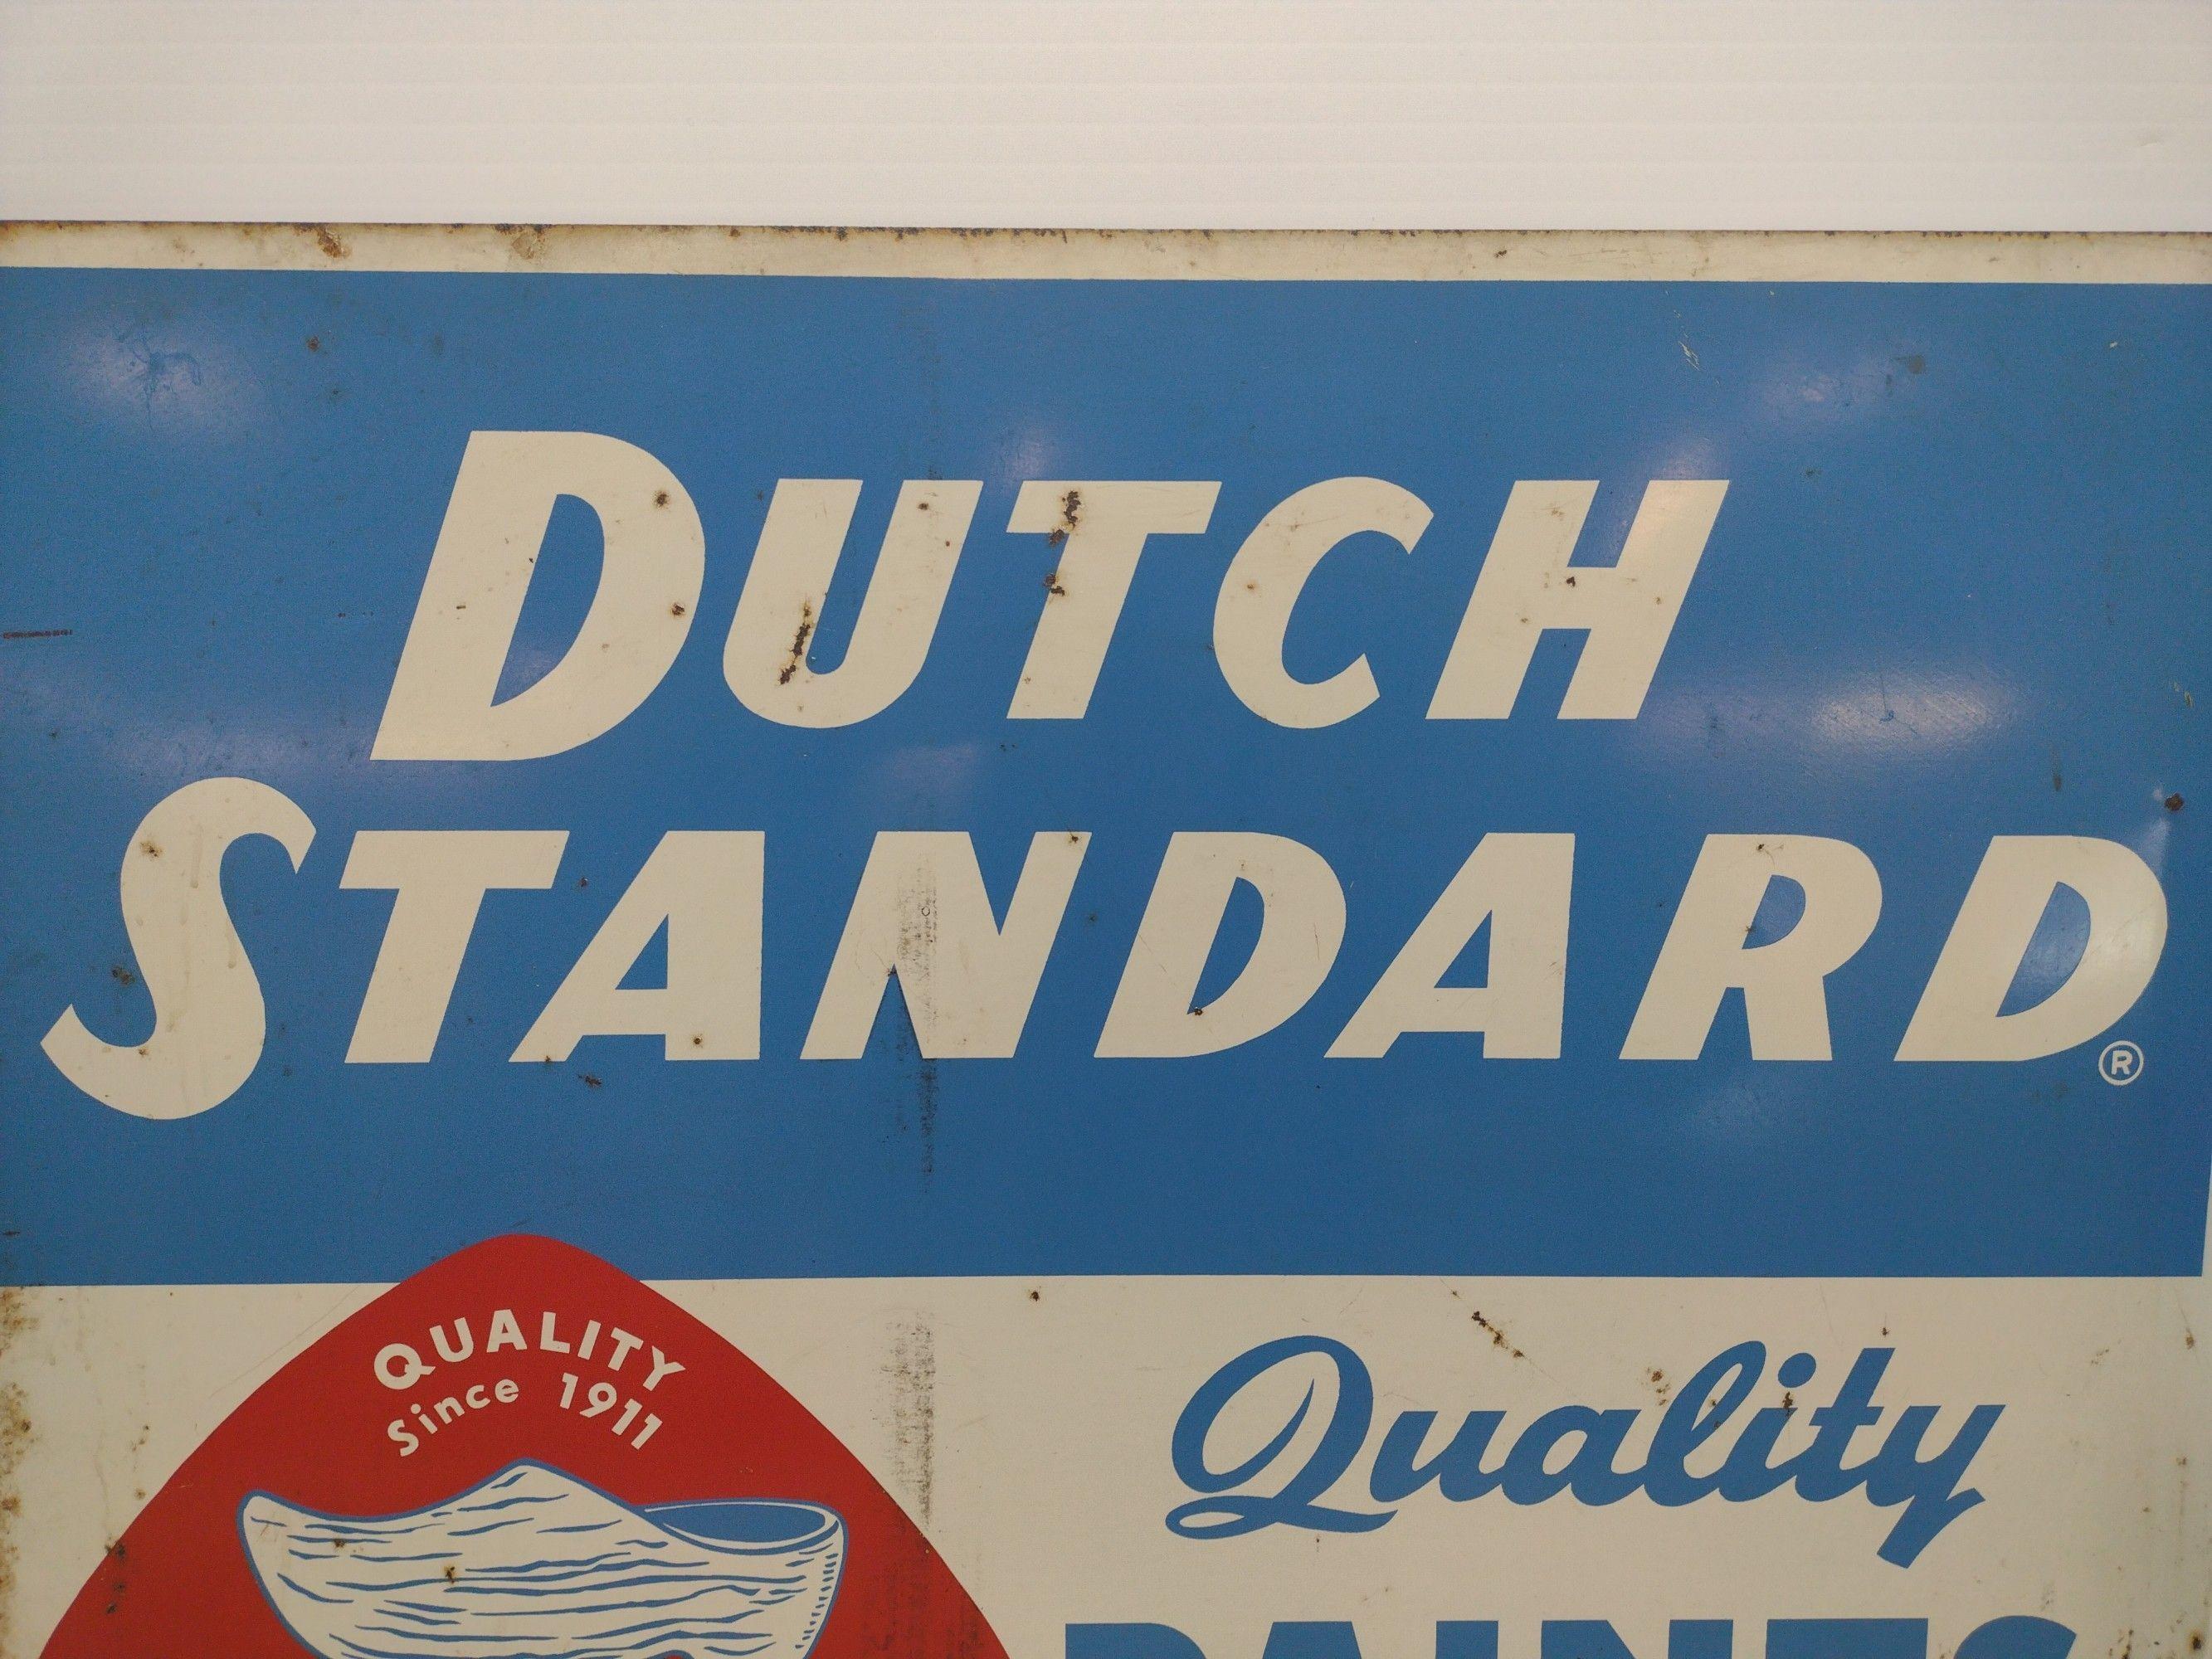 DST Dutch Standard Flanged Sign